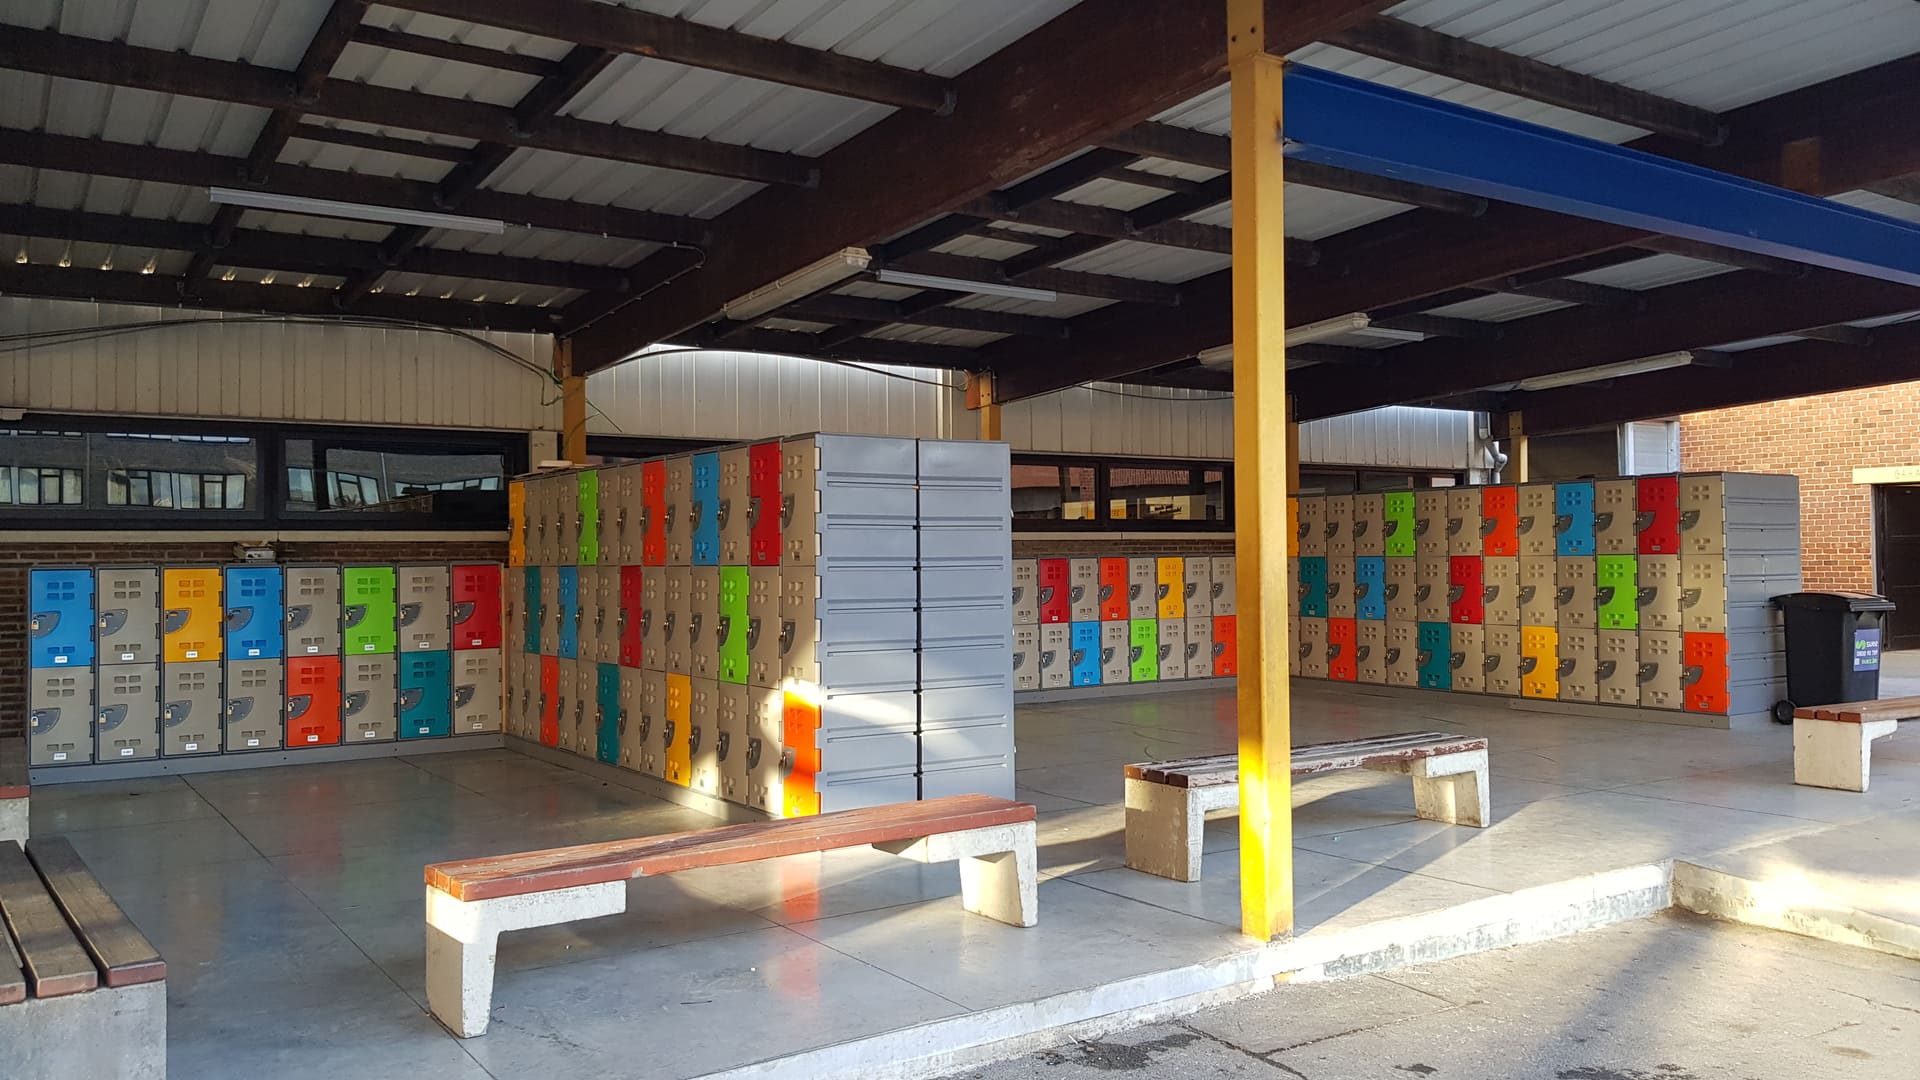 Plastic school lockers in the playground